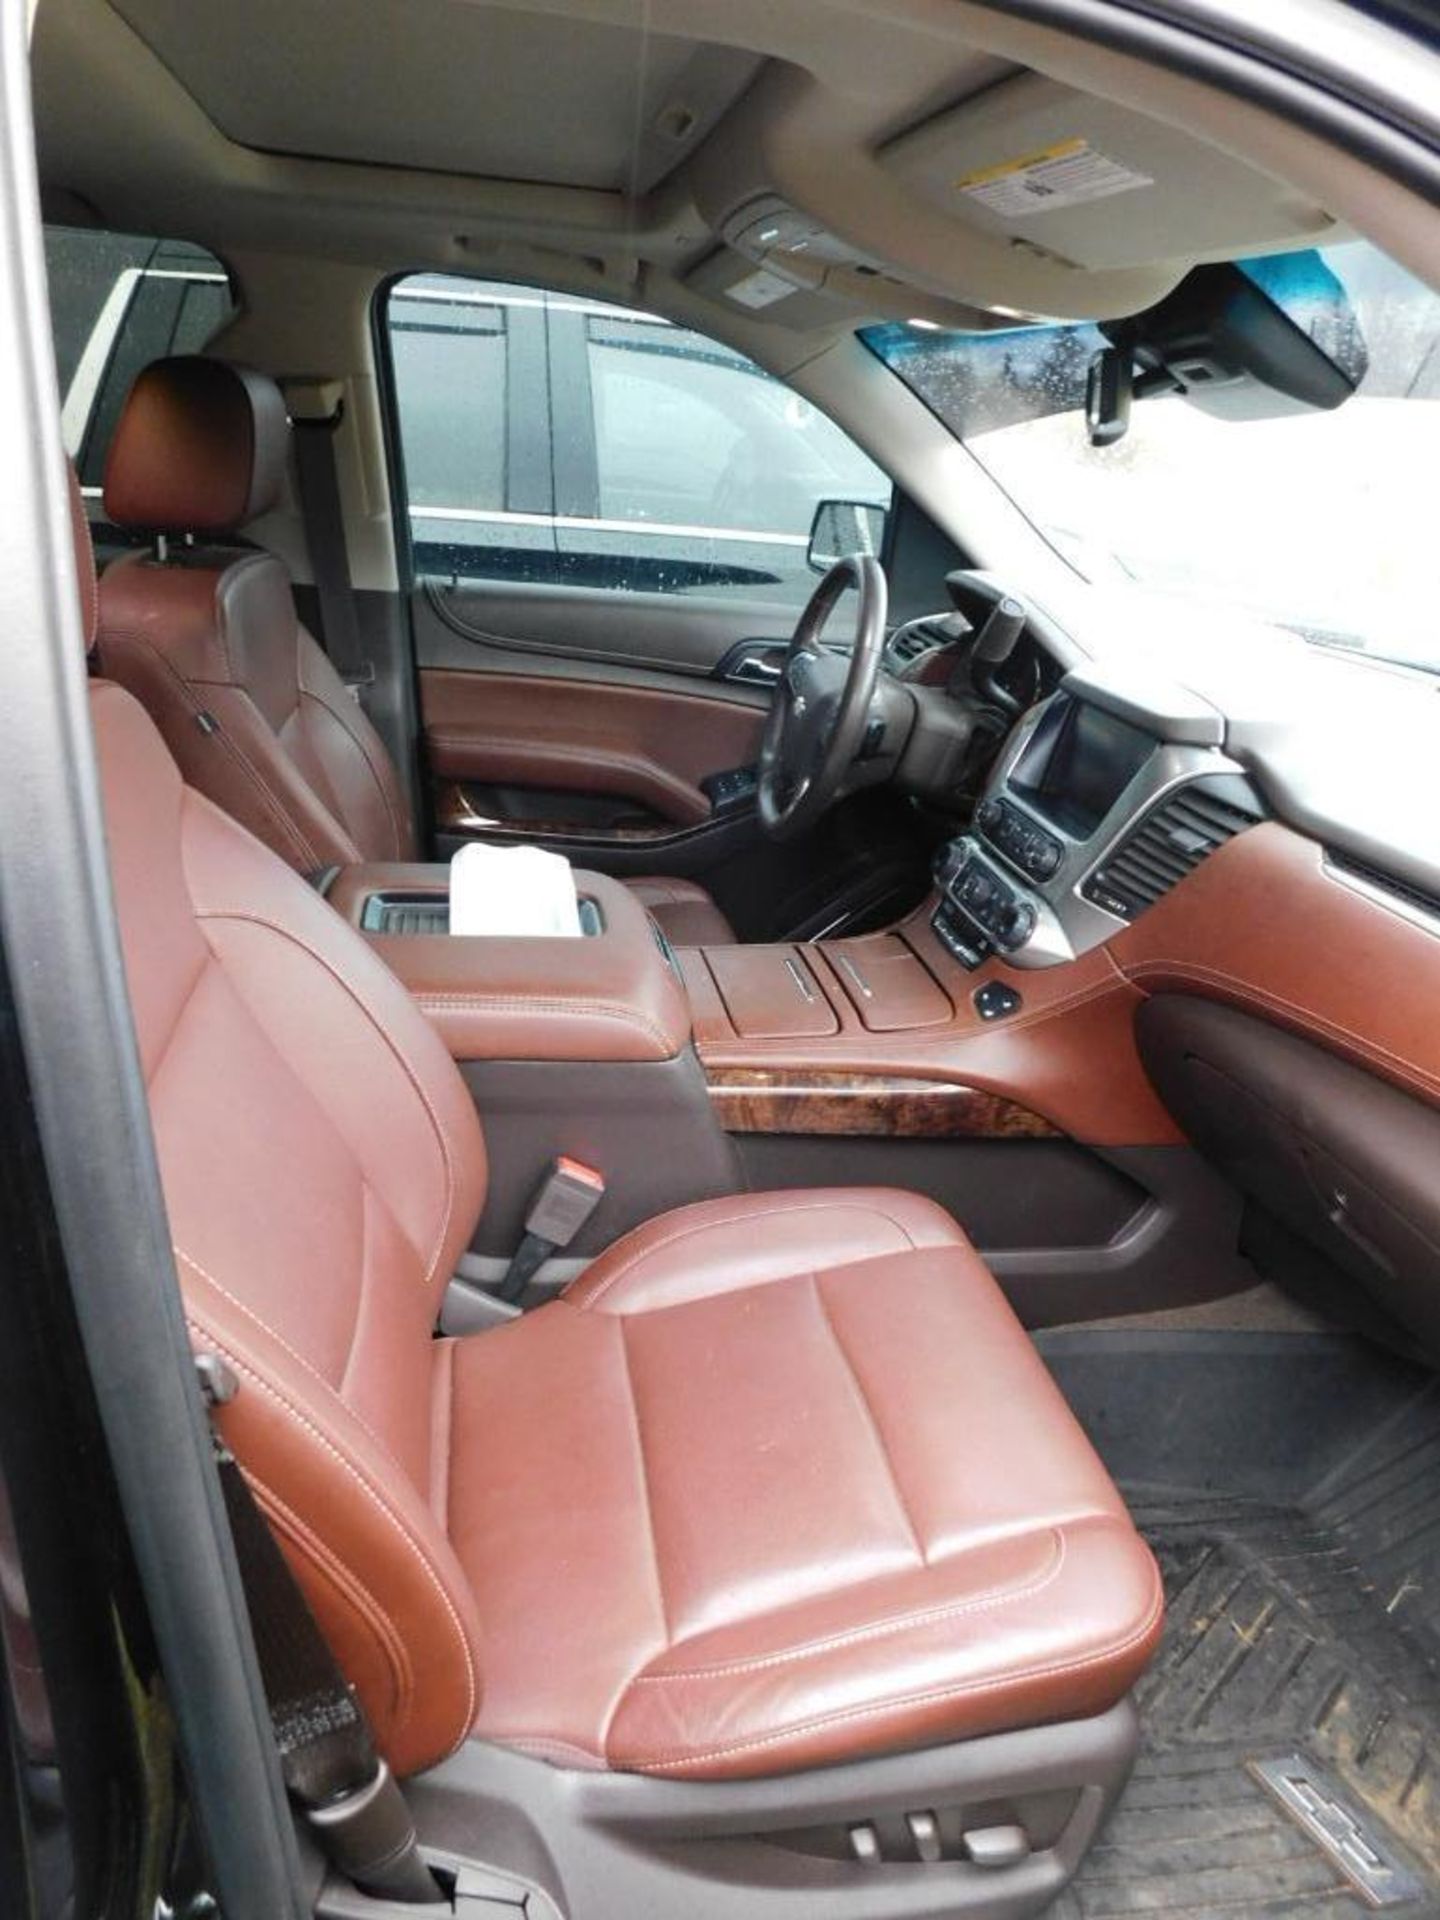 2019 Chevy Tahoe, 4-Wheel Drive, Premier Edition, 6.2 Liter, V8 Gasoline Motor, Auto, 42,539 Miles I - Image 7 of 11